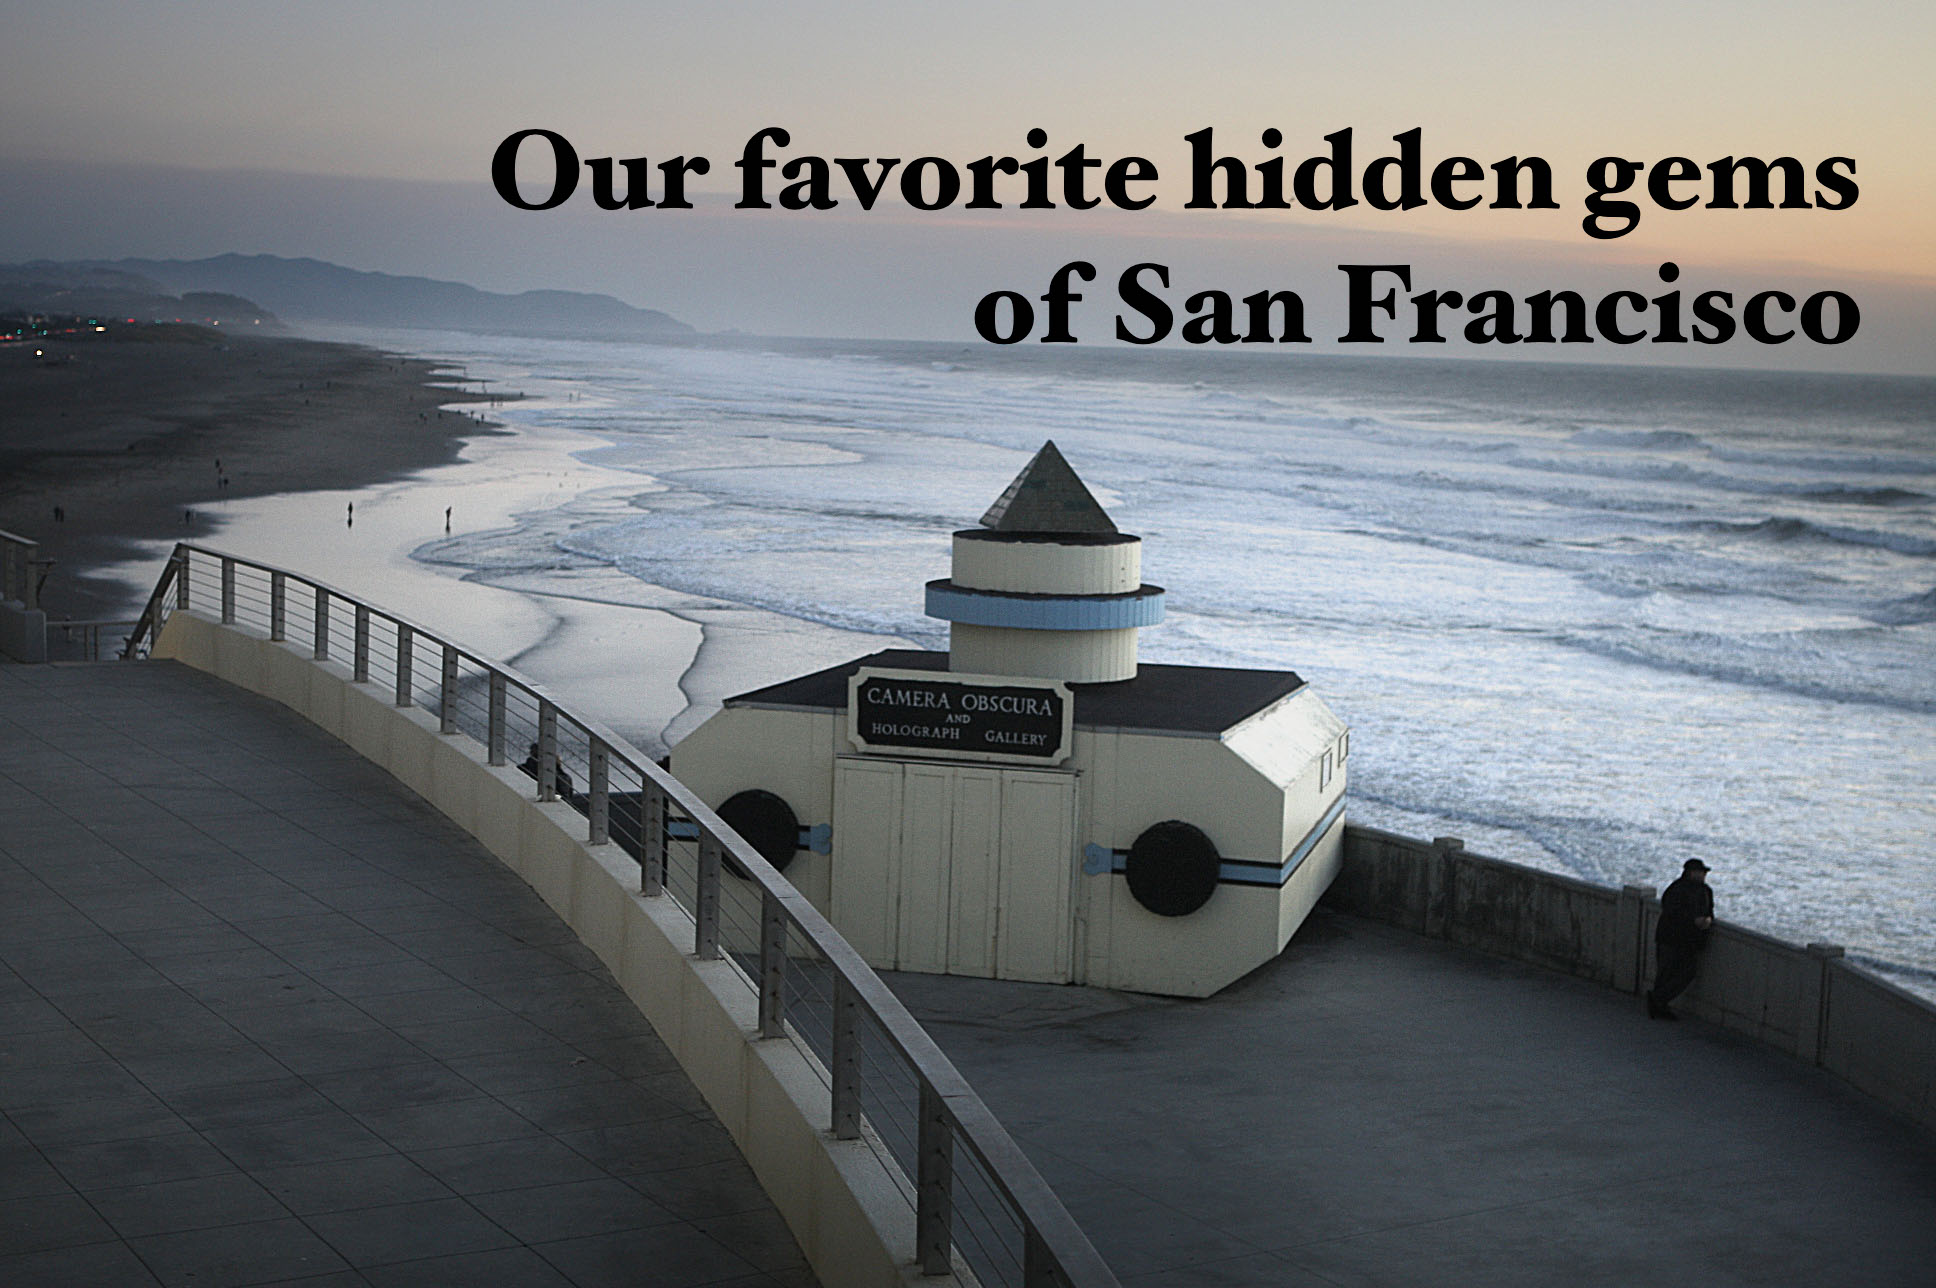 The best hidden gems and secret spots in San Francisco